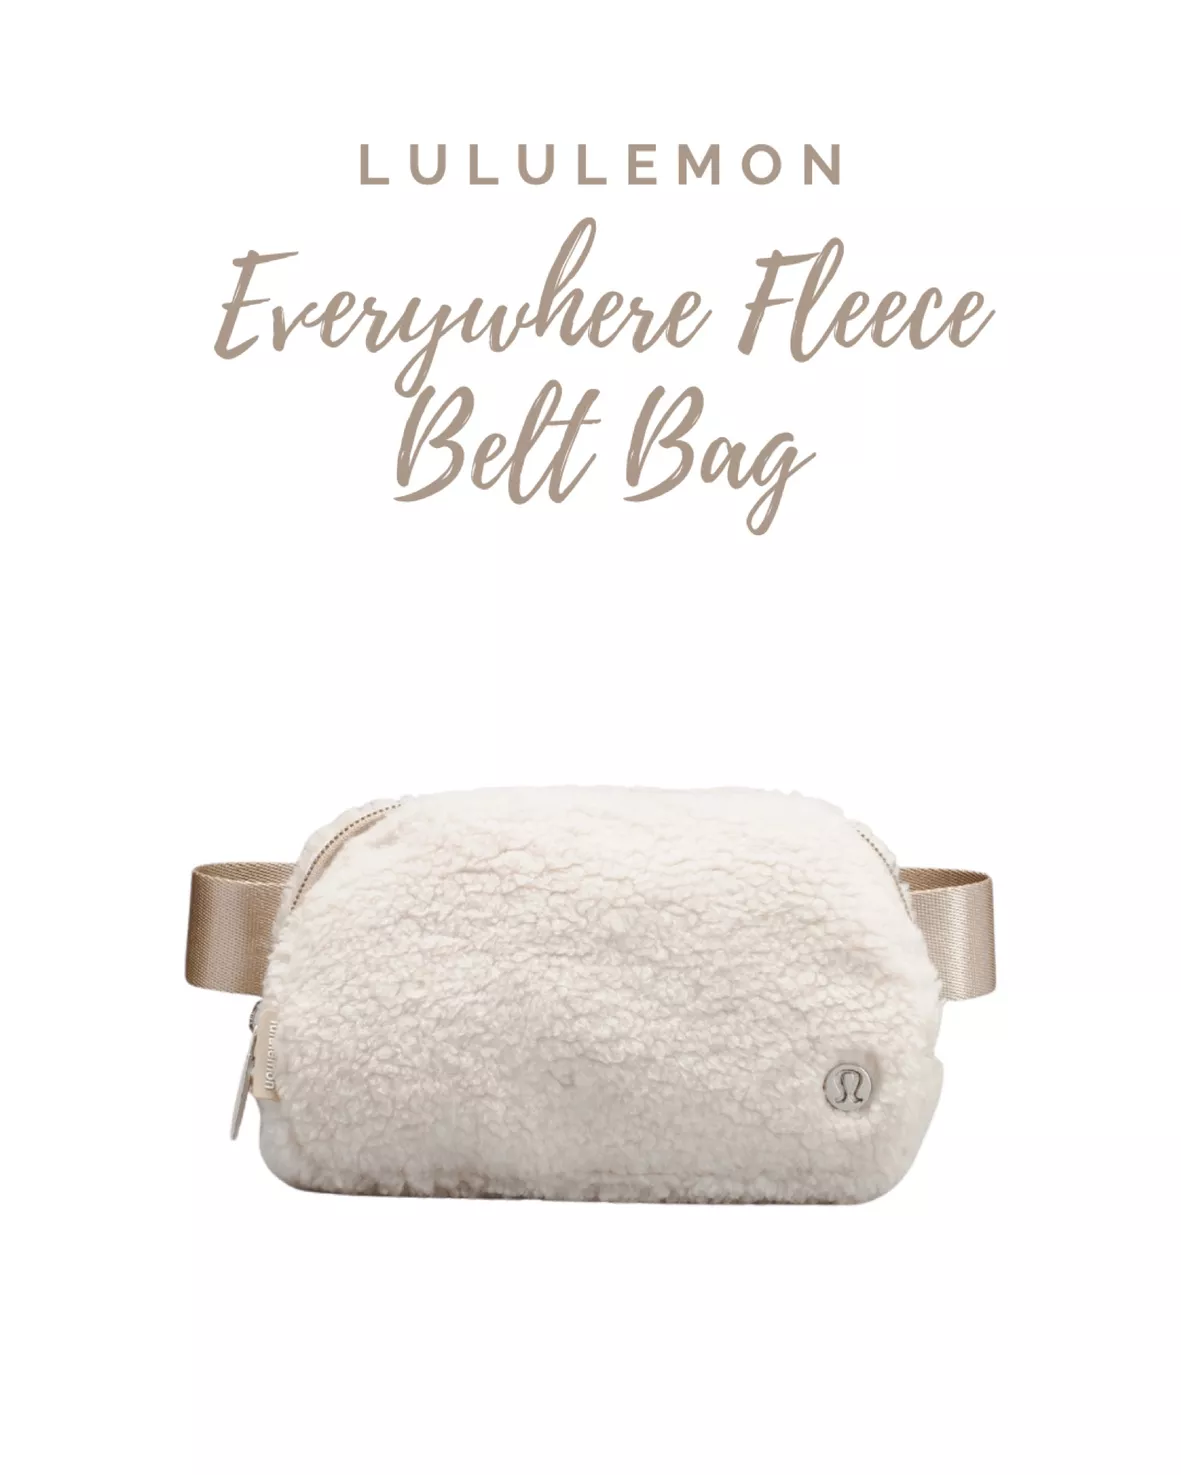 lululemon Everywhere Fleece Belt Bag Is Back in Stock - Shop